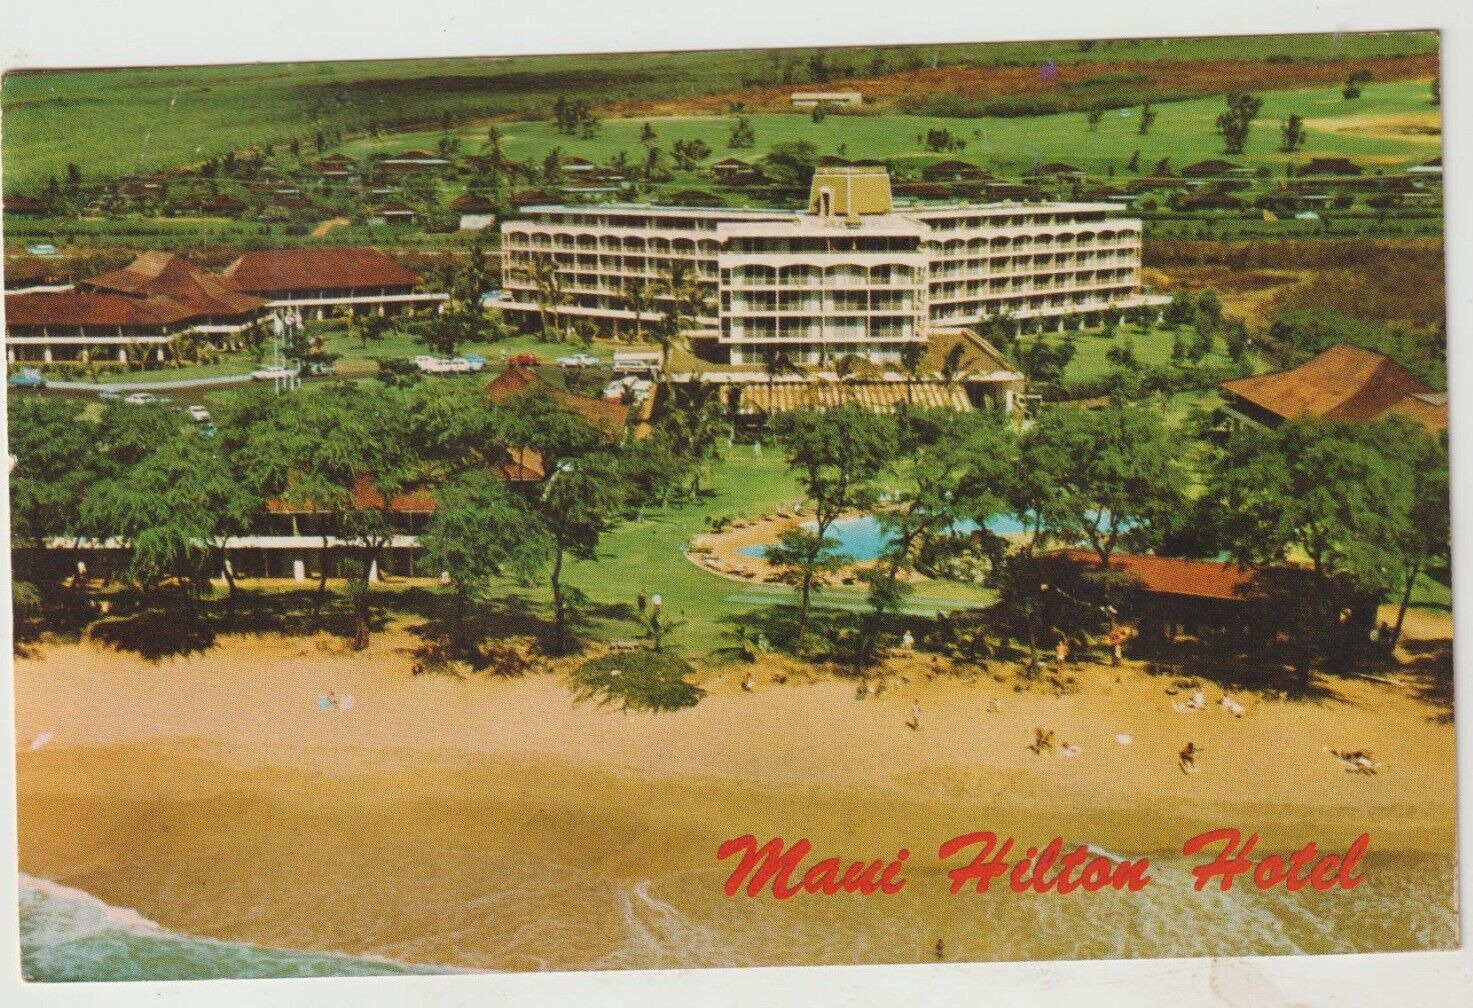 Maui Hawaii Hilton Hotel Kaanapali Beach Chrome Postcard